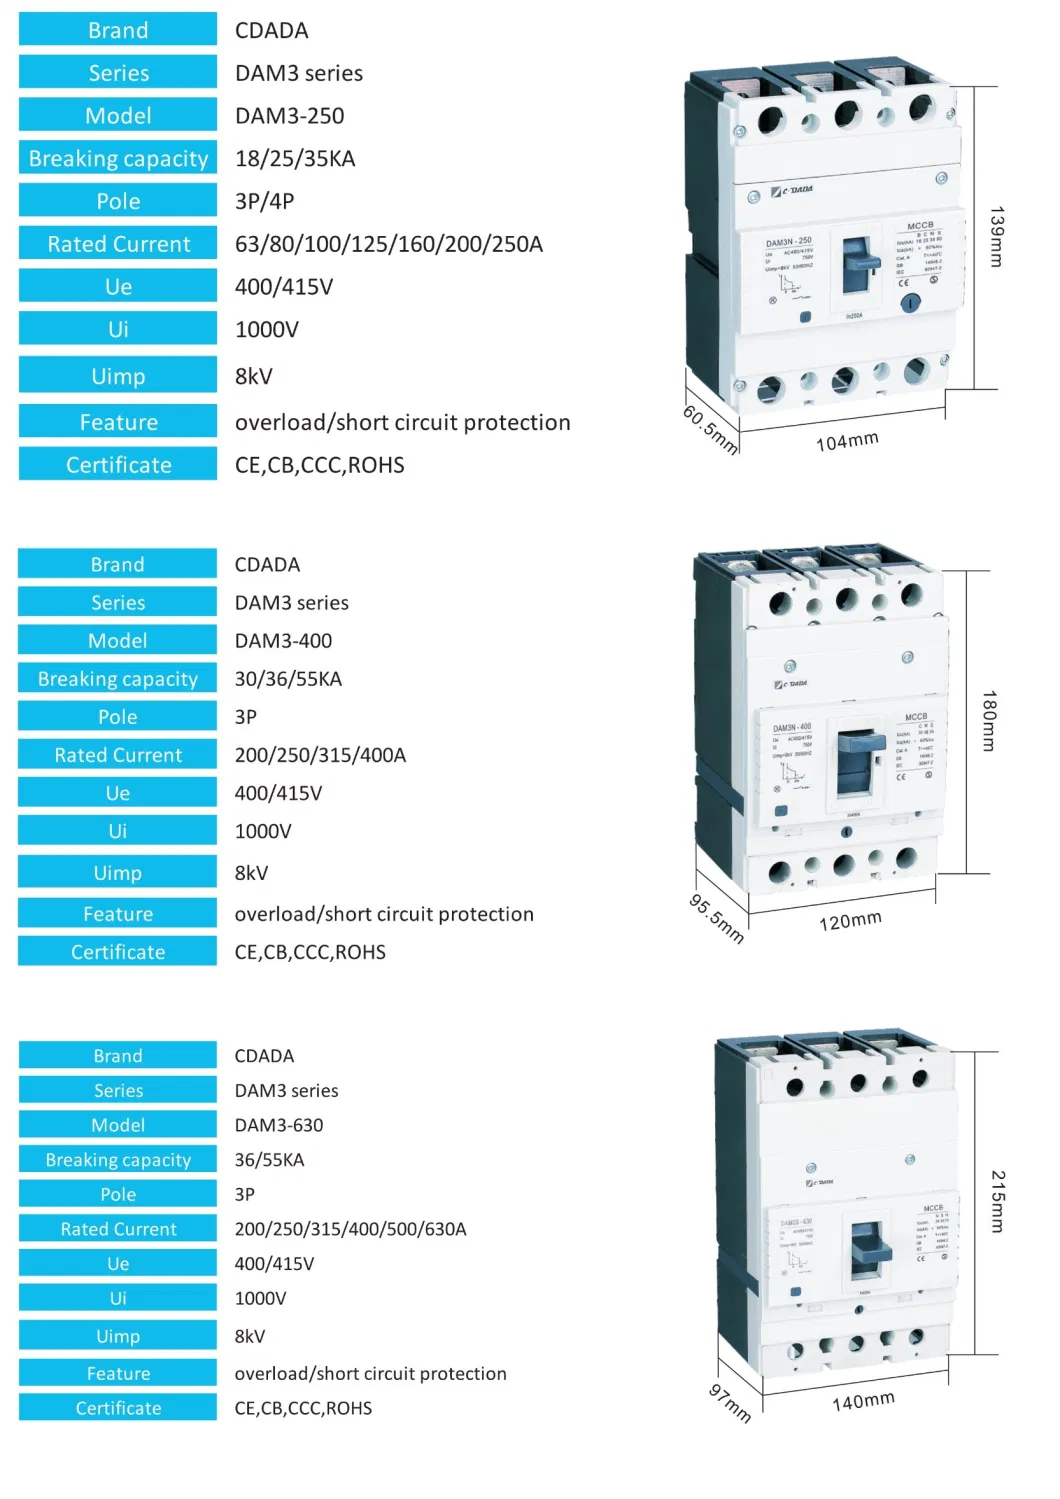 MCCB Dam3-160 3p 16~160A Compact DIN Rail Molded Case Circuit Breaker